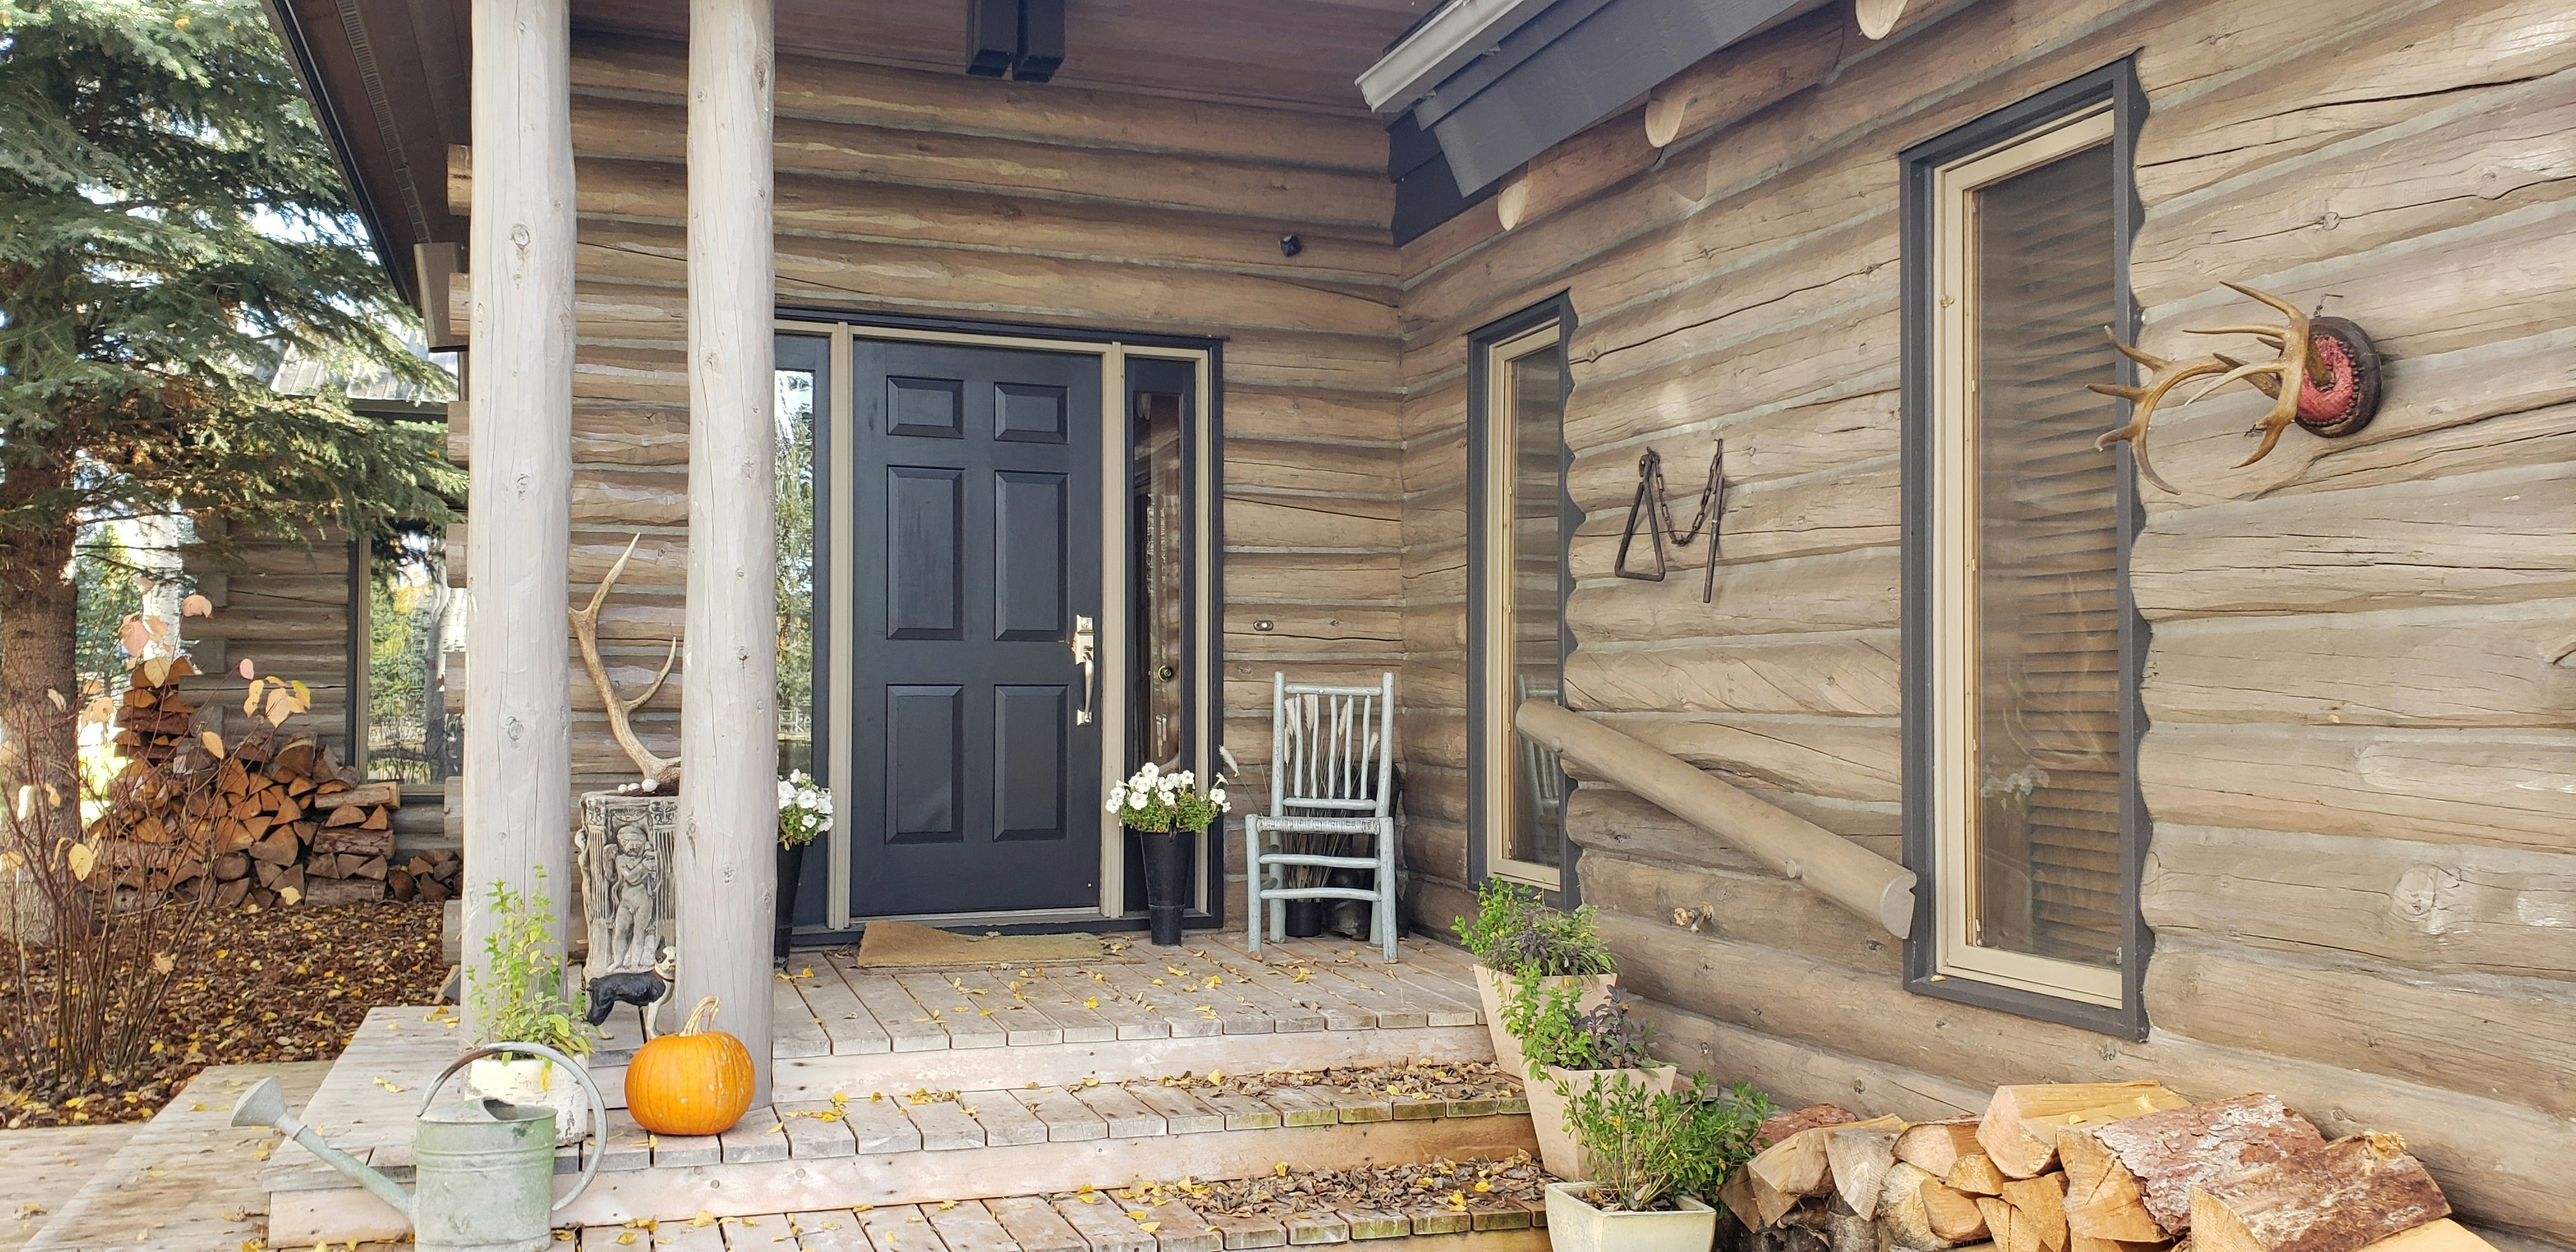 You'll make a grand entrance at a Western Star Ranch cabin.